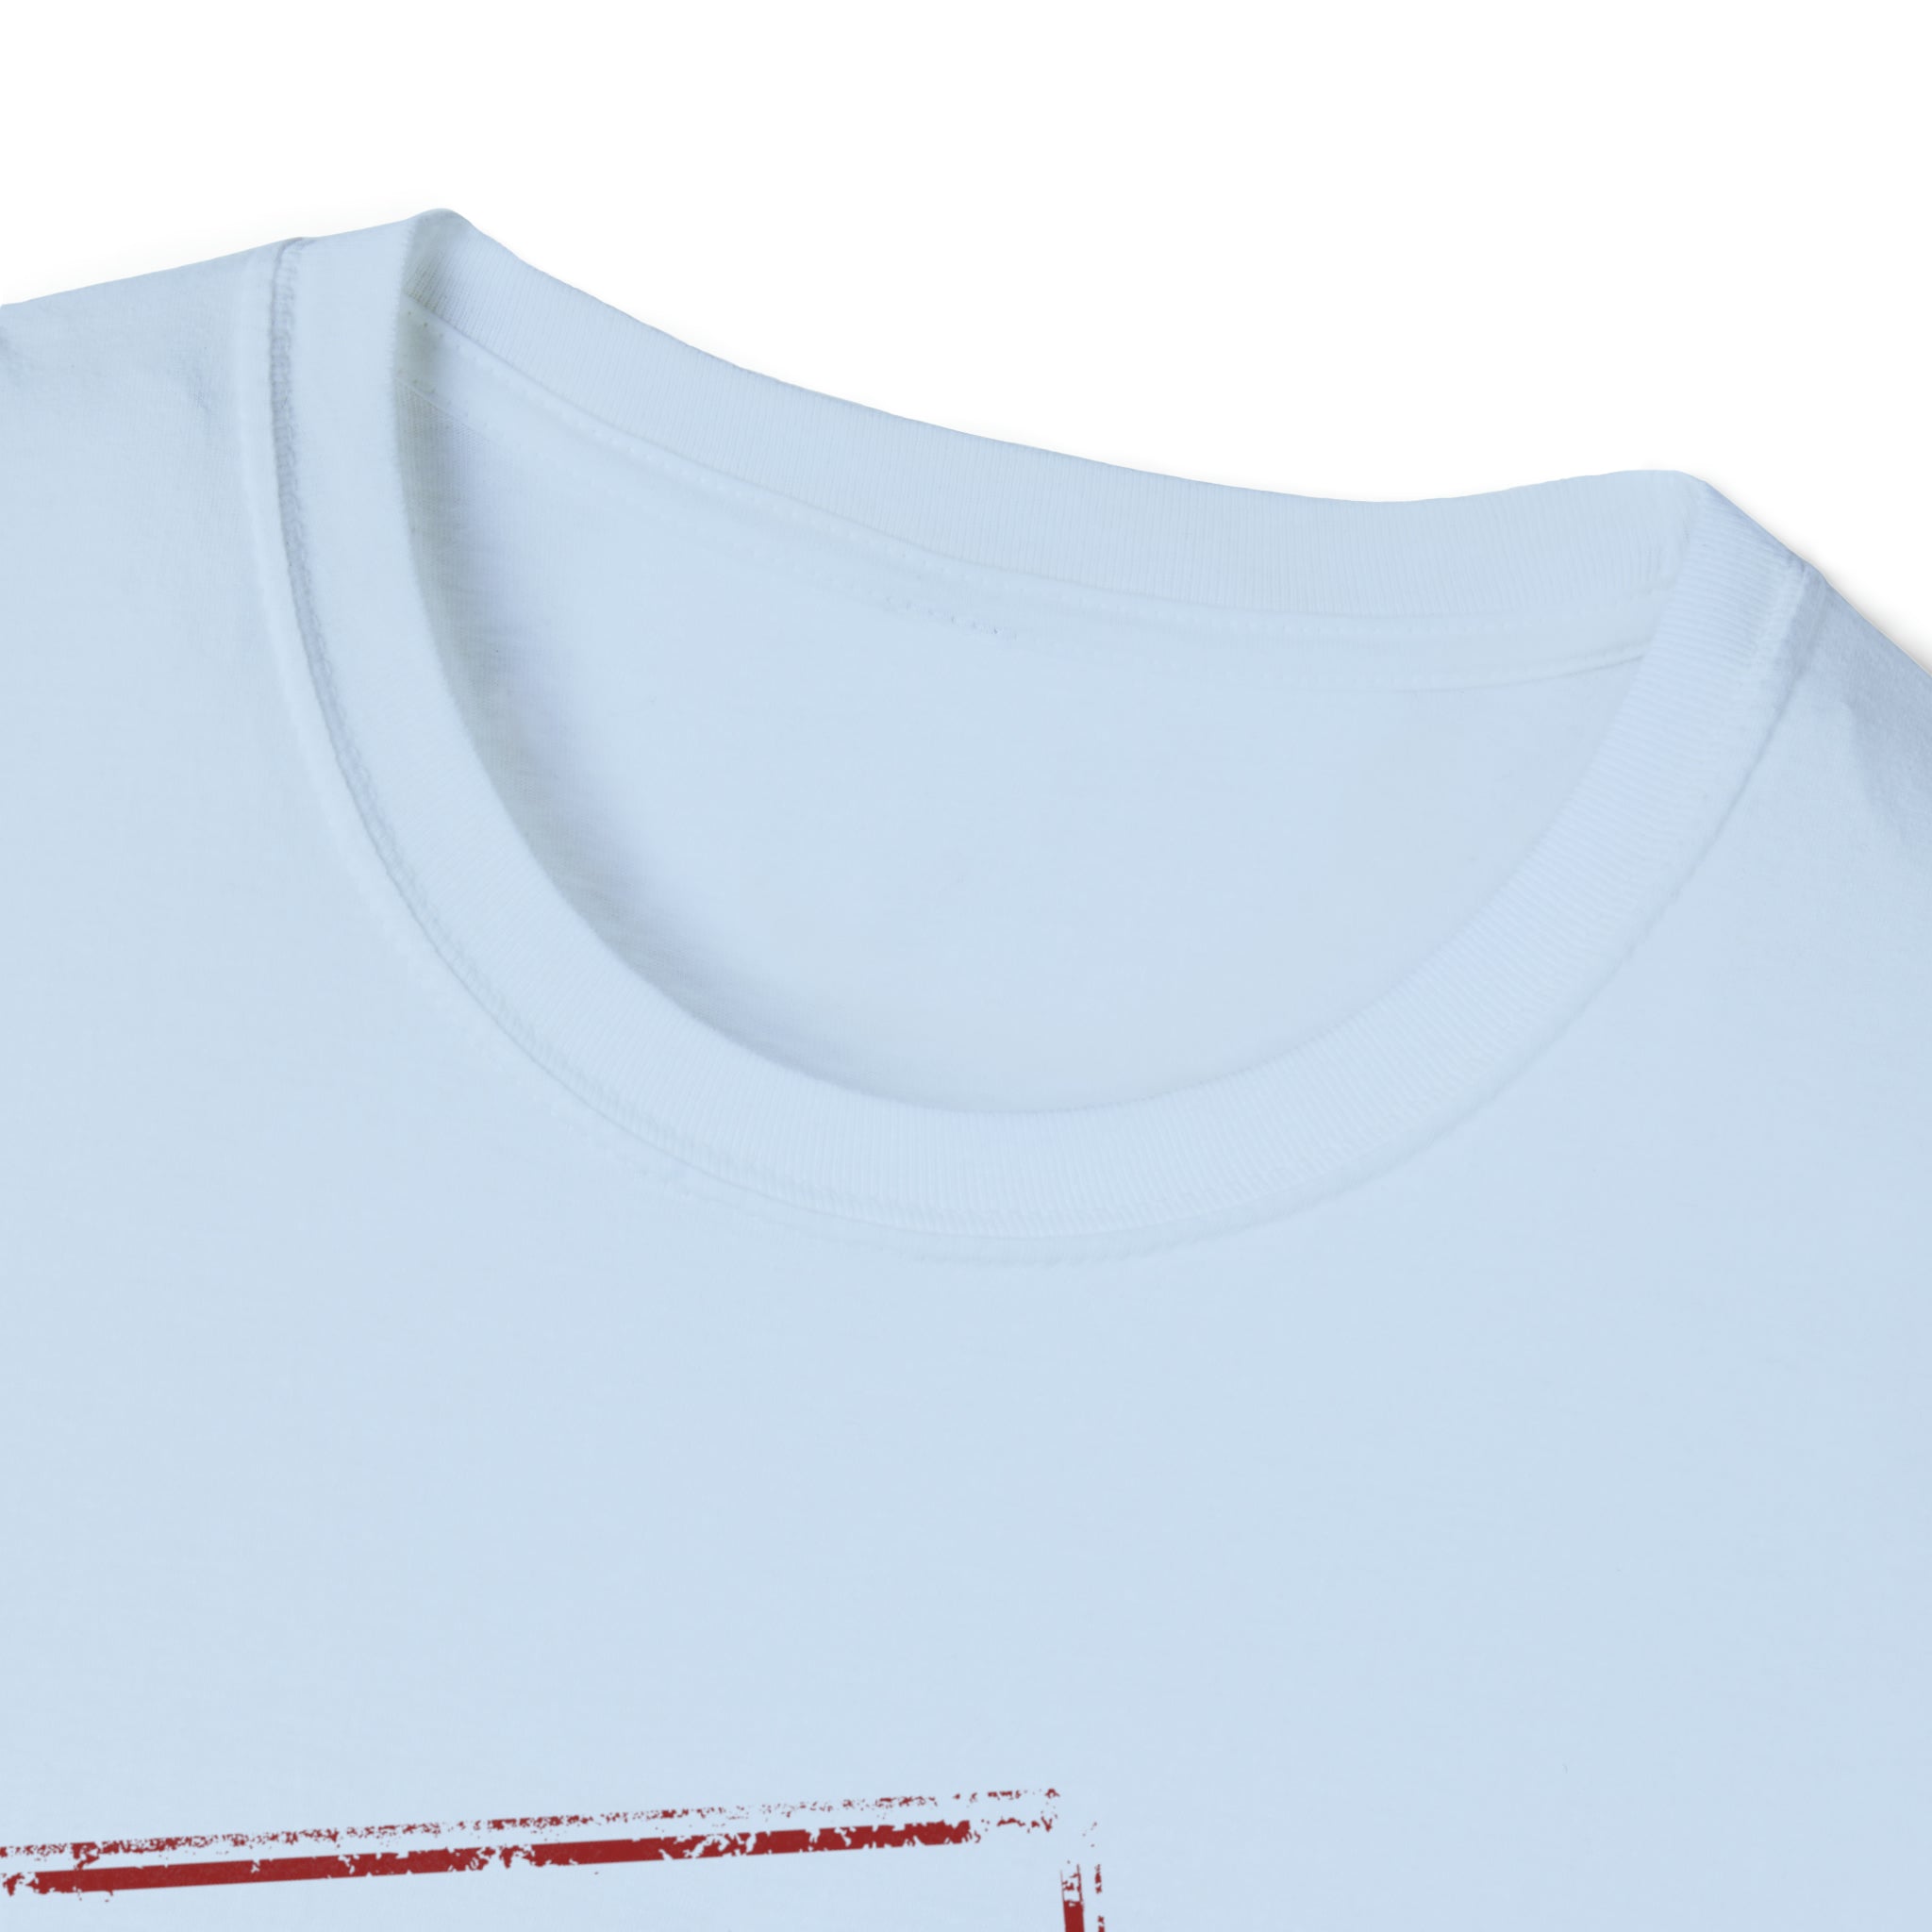 Mandatory Family Fun Required - Men's Unisex Softstyle T-Shirt